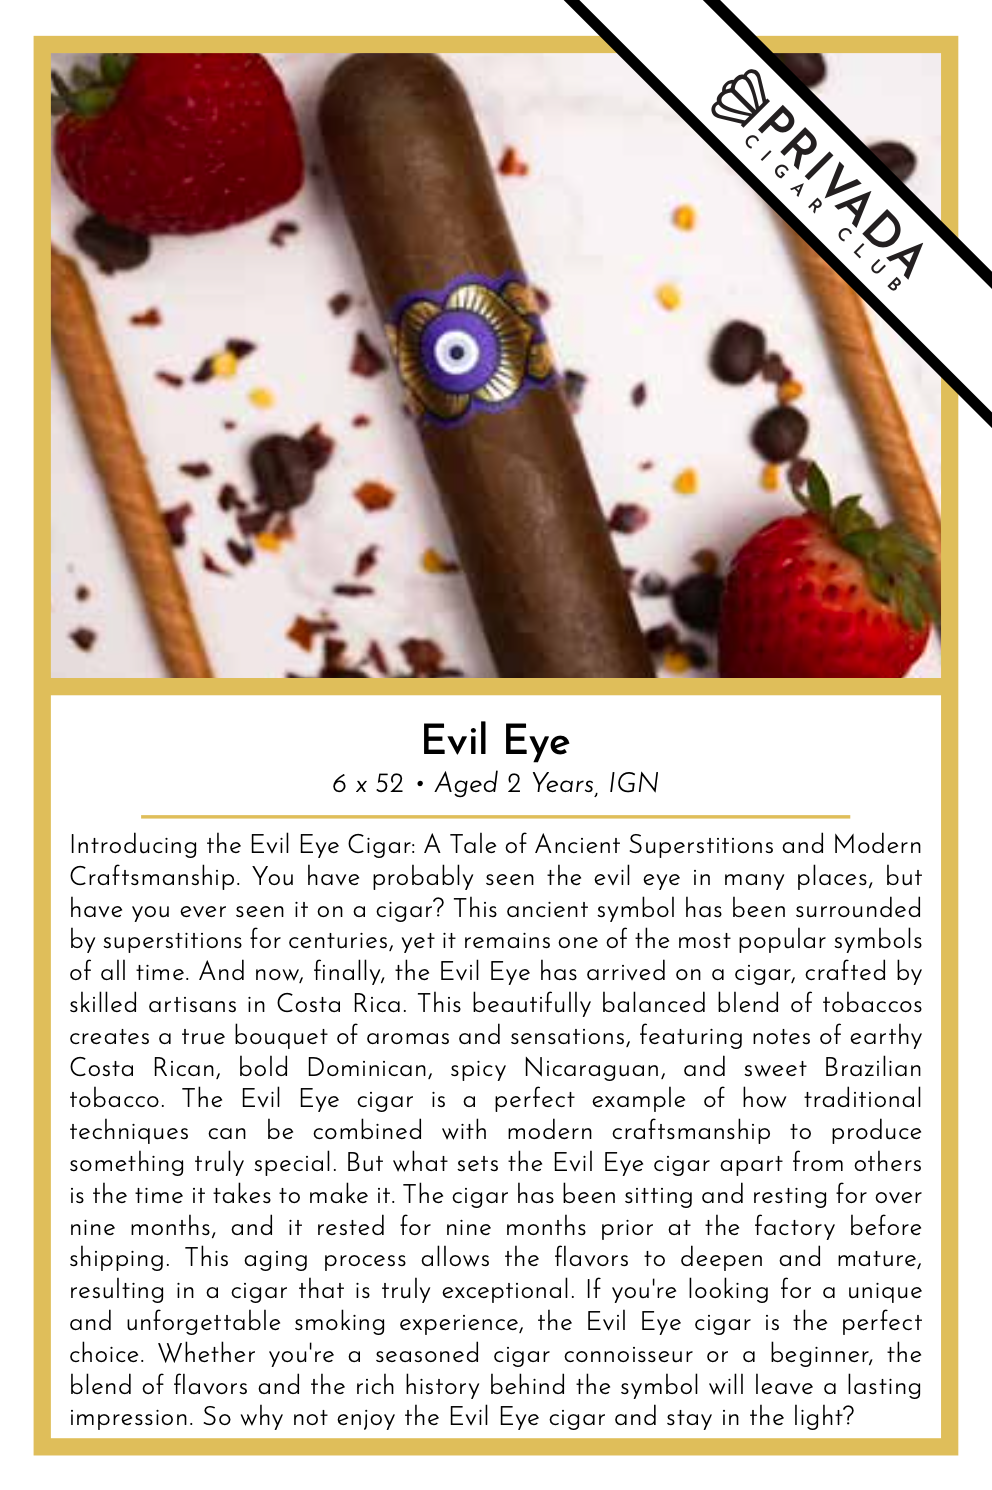 About Evil Eye Cigar